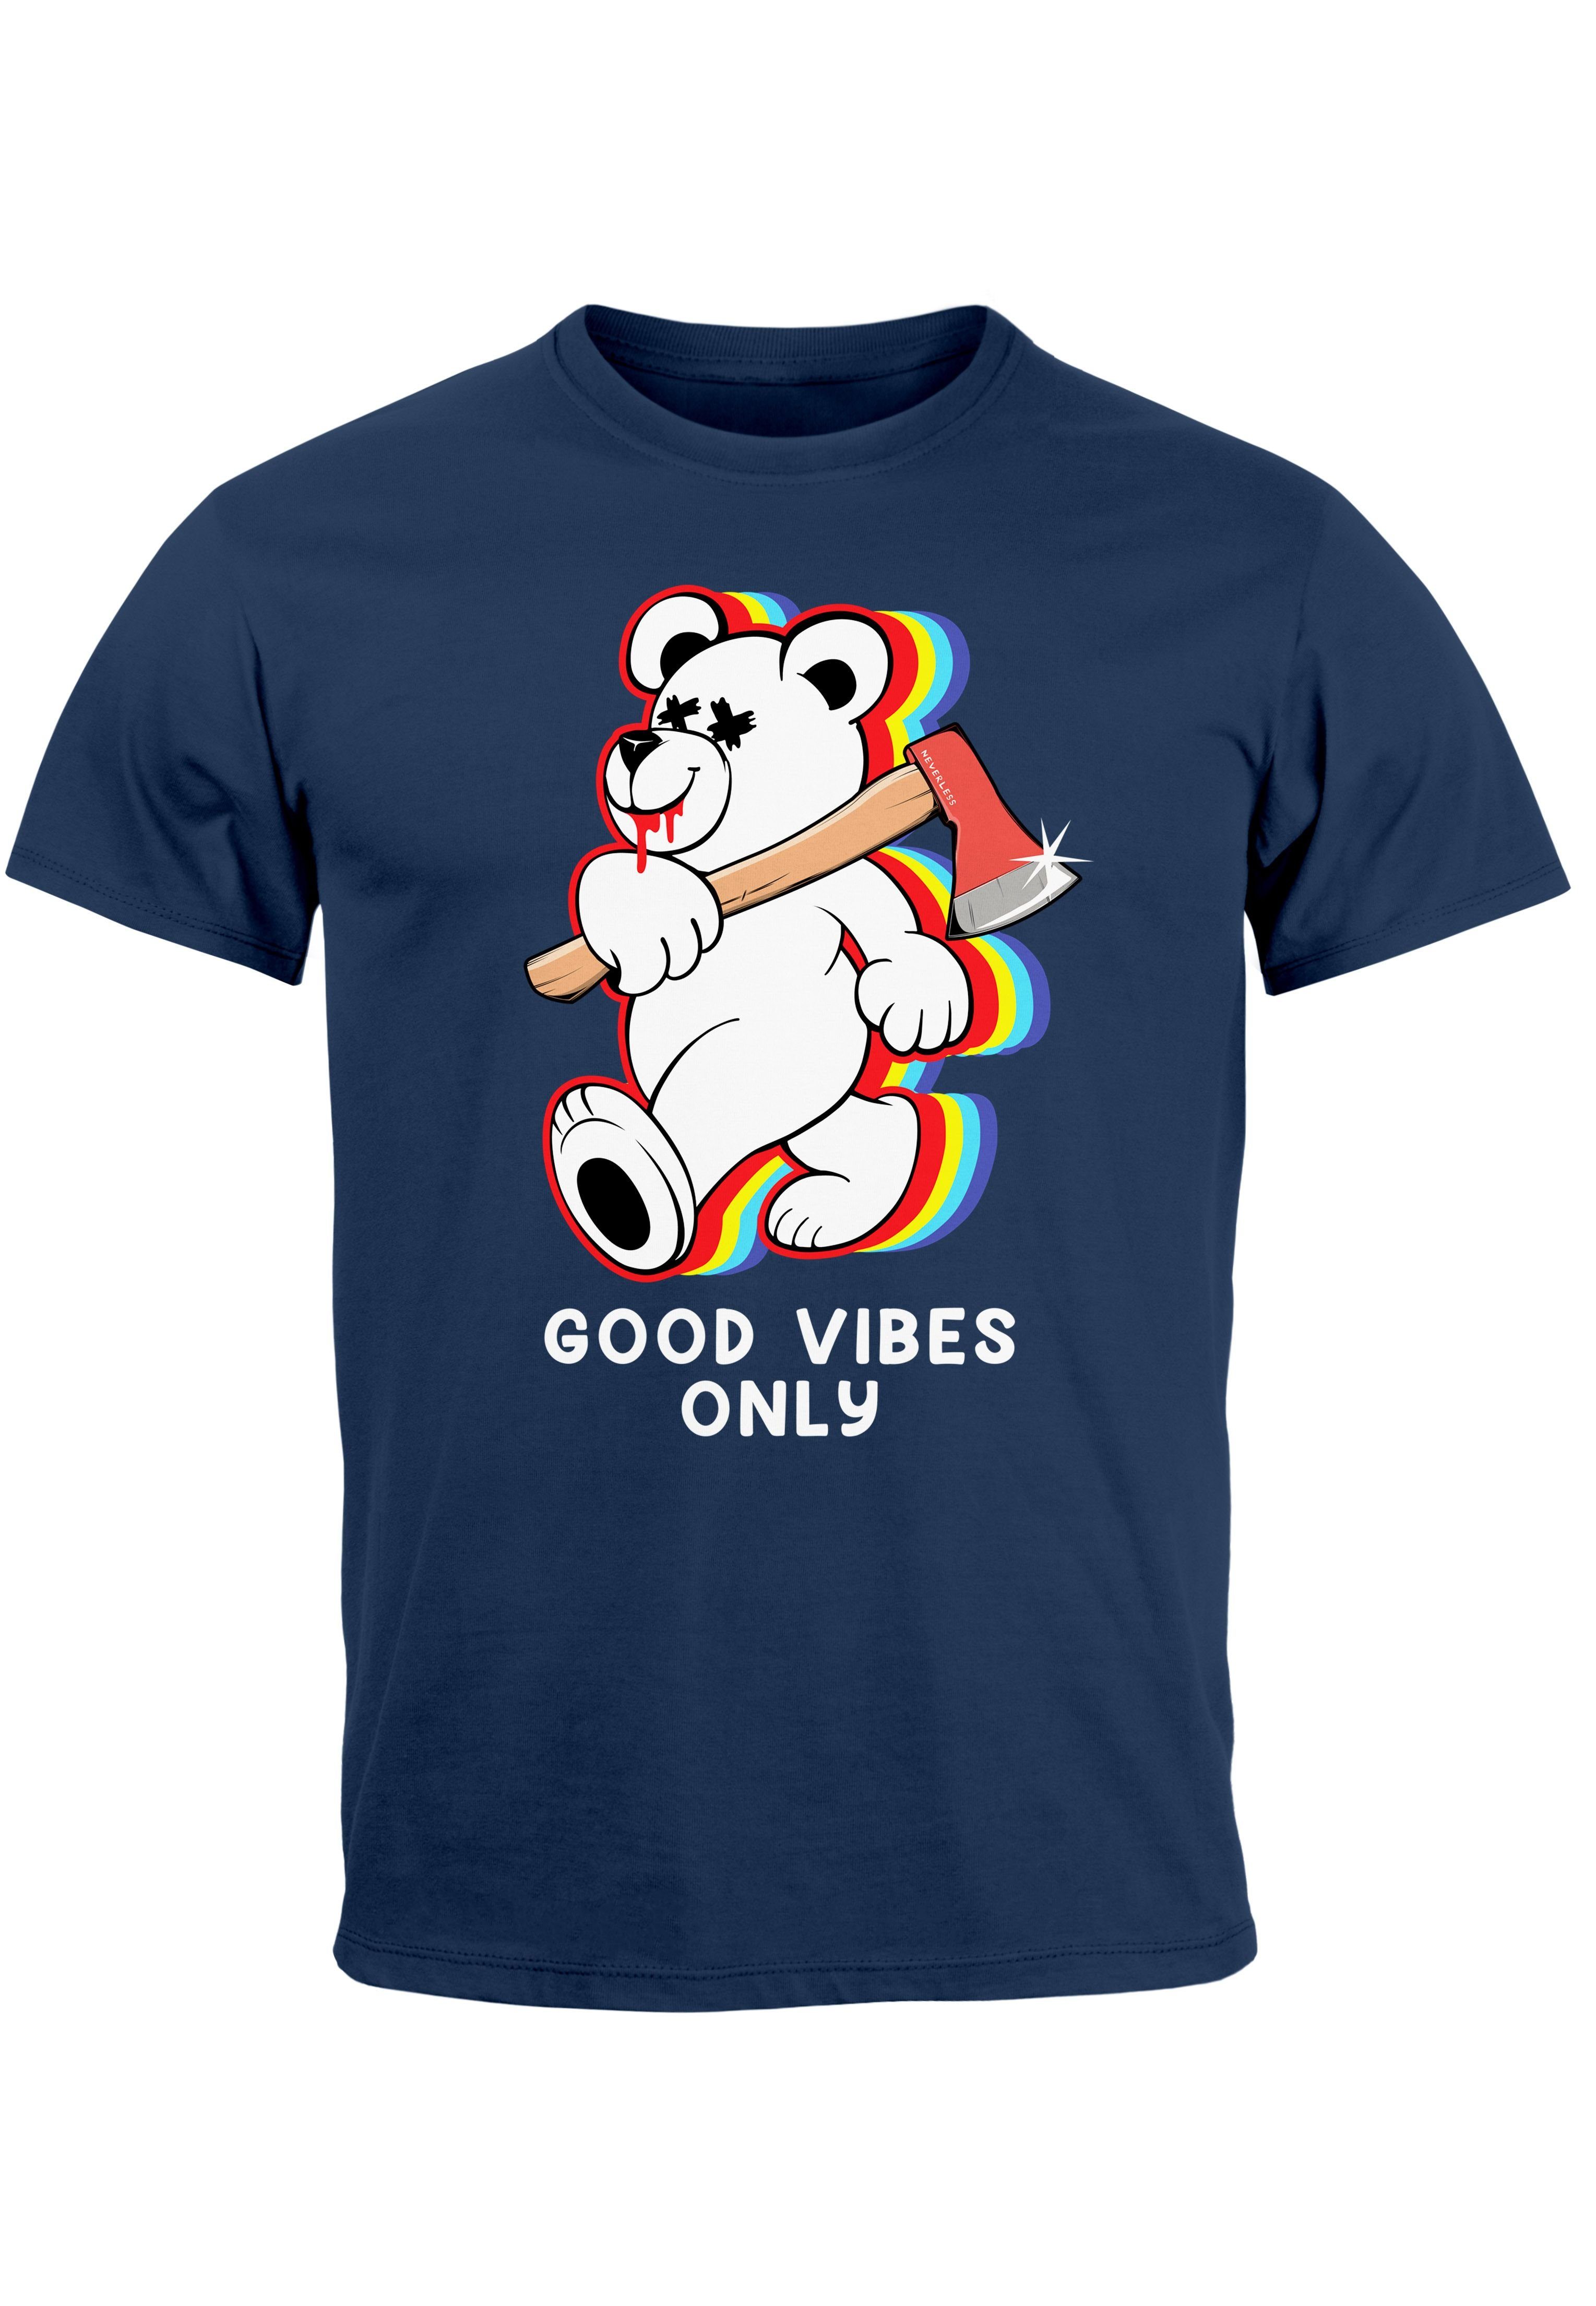 Neverless Print-Shirt Herren navy Axt Good Only Vibes Teddy Sarkasmus Print mit Fashi Bär Teachwear T-Shirt